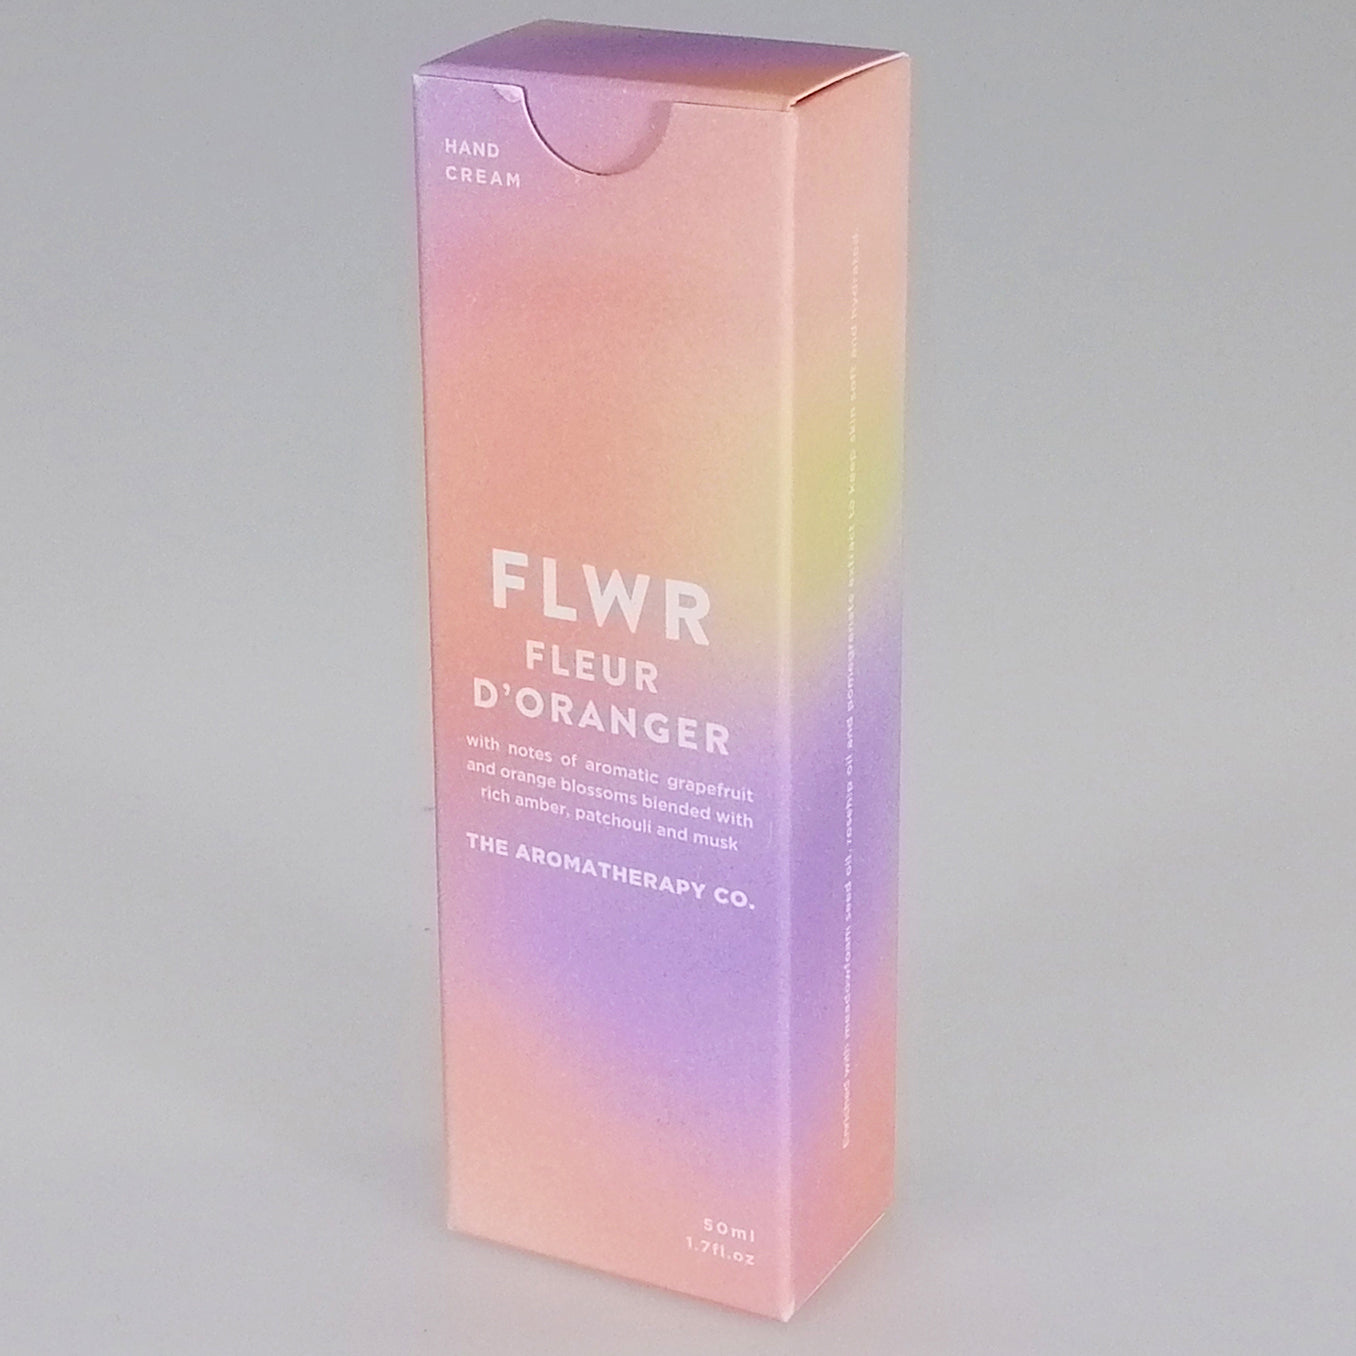 The Aromatherapy Co. FLWR Hand Cream - Fleur D'Oranger